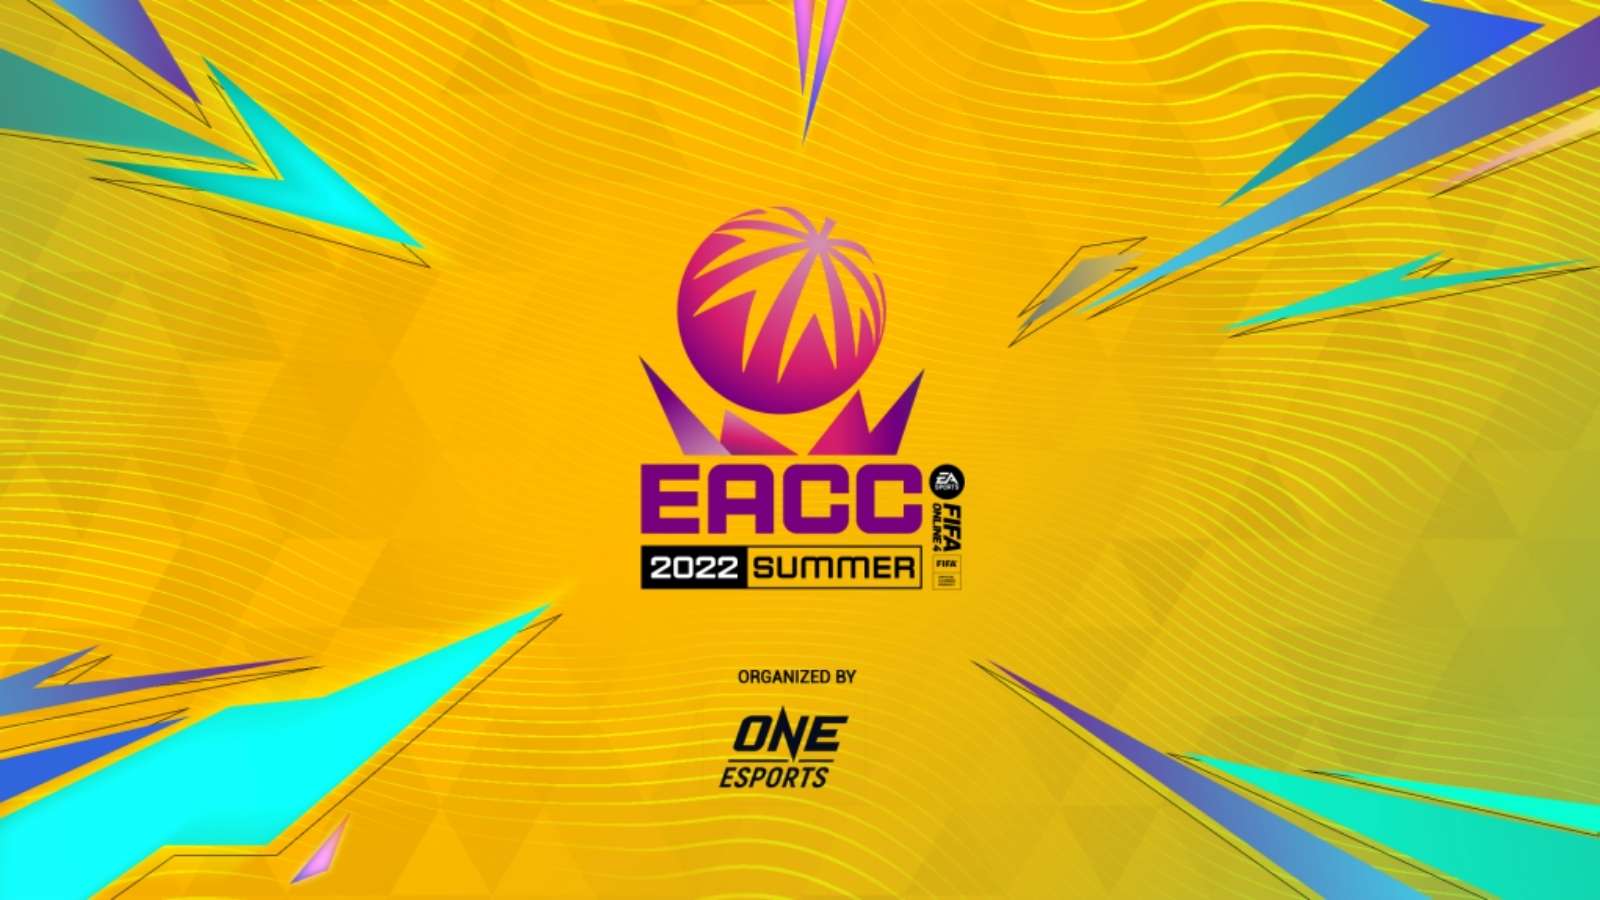 EACC Summer 2022